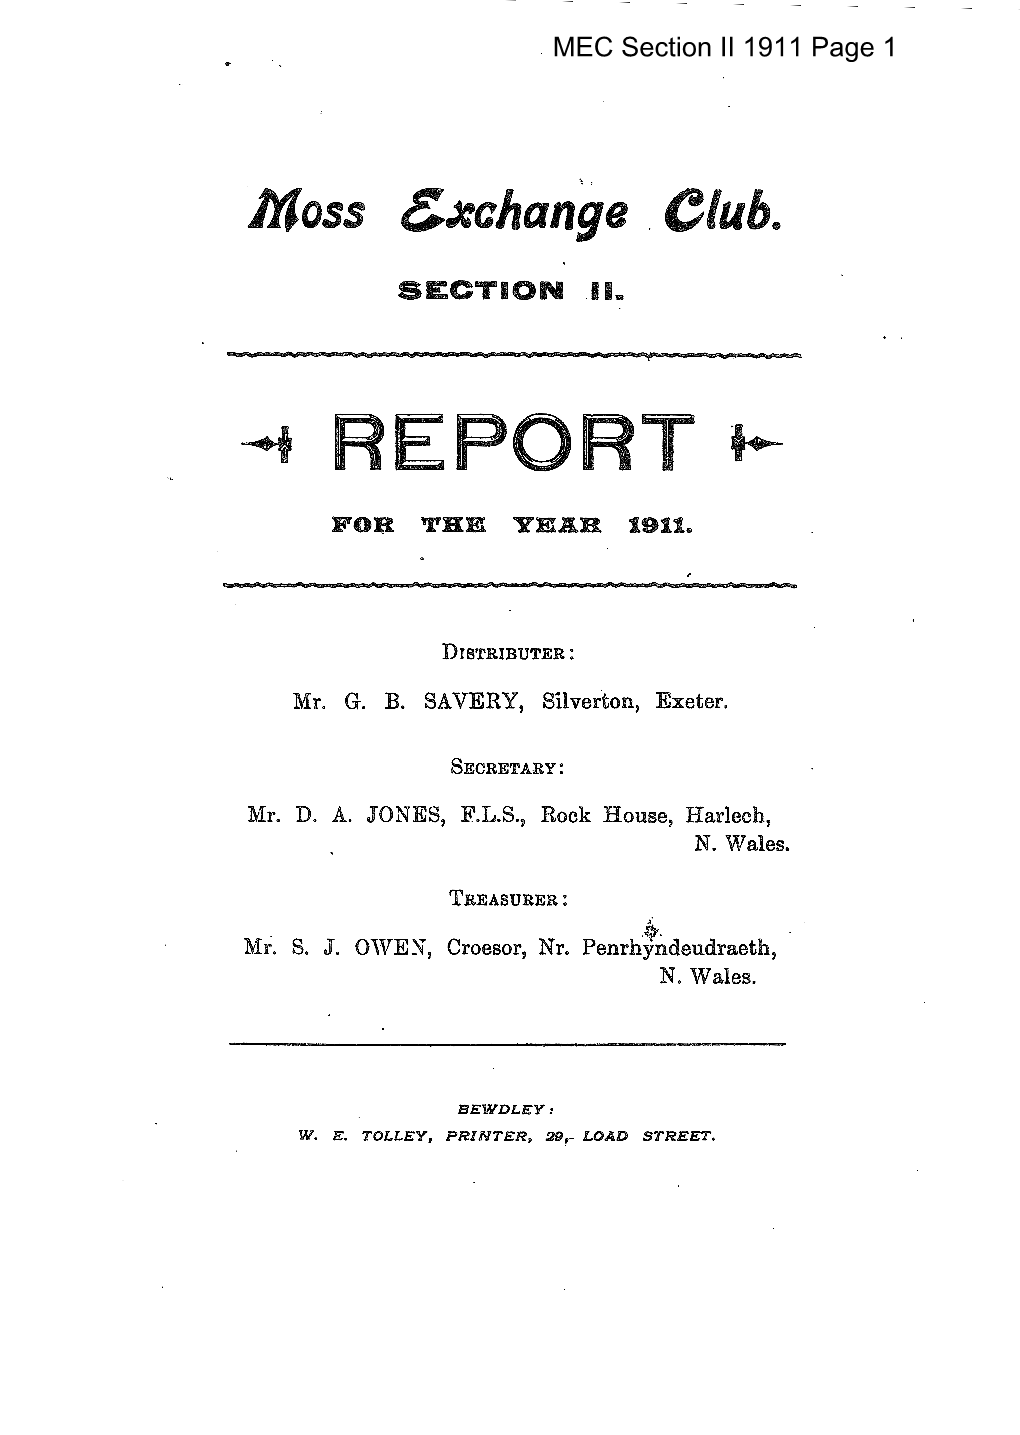 MEC Report Section II 1911